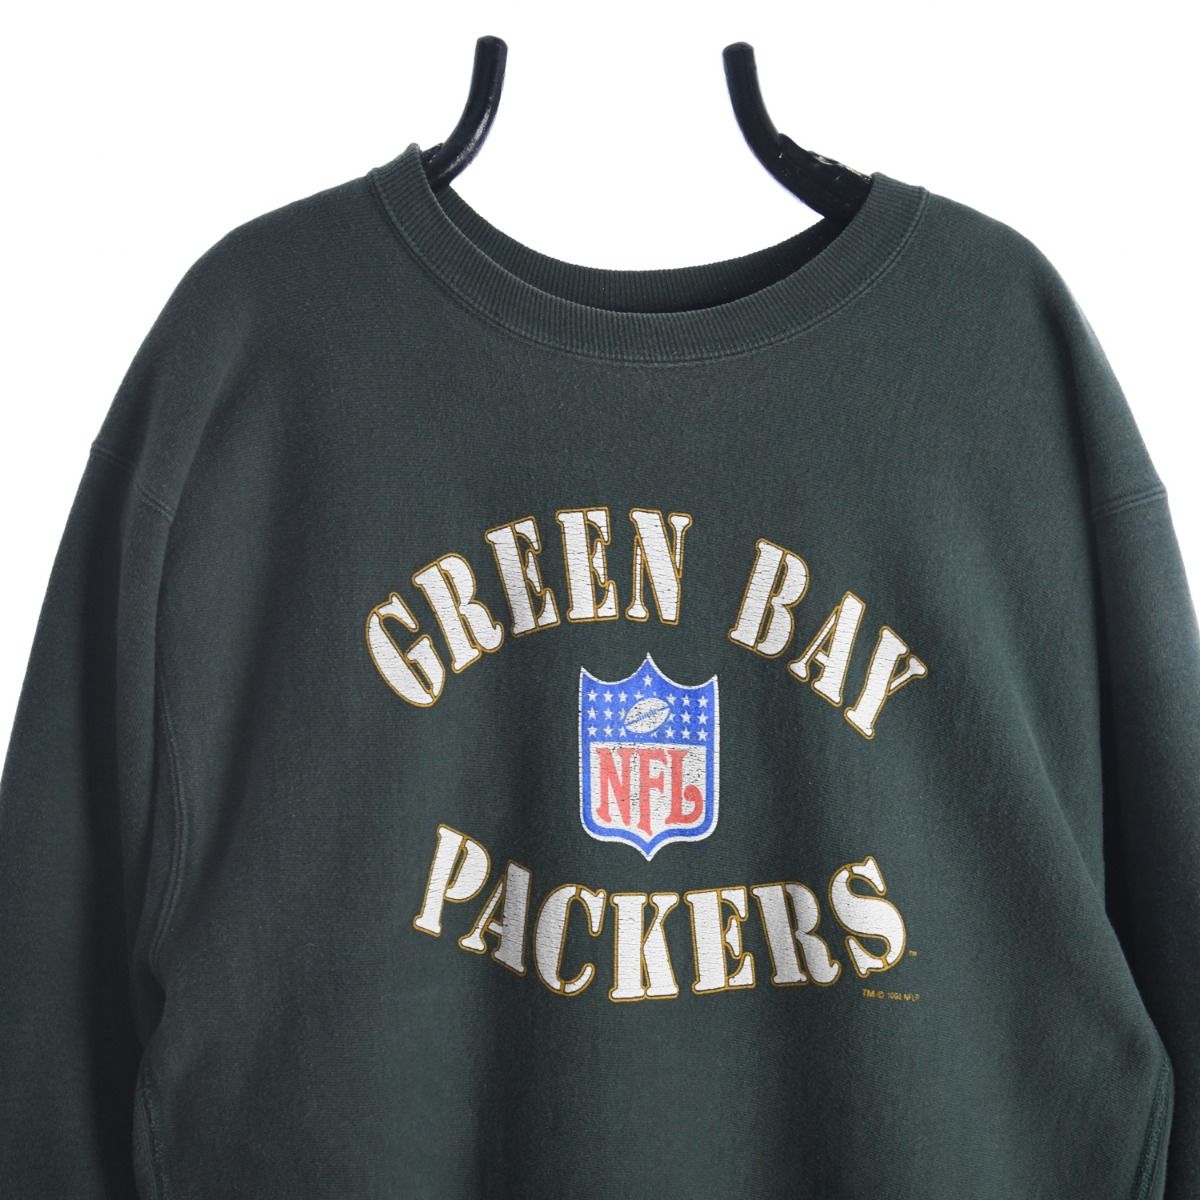 Green Bay Packers Champion 1990s Reverse Weave Sweatshirt